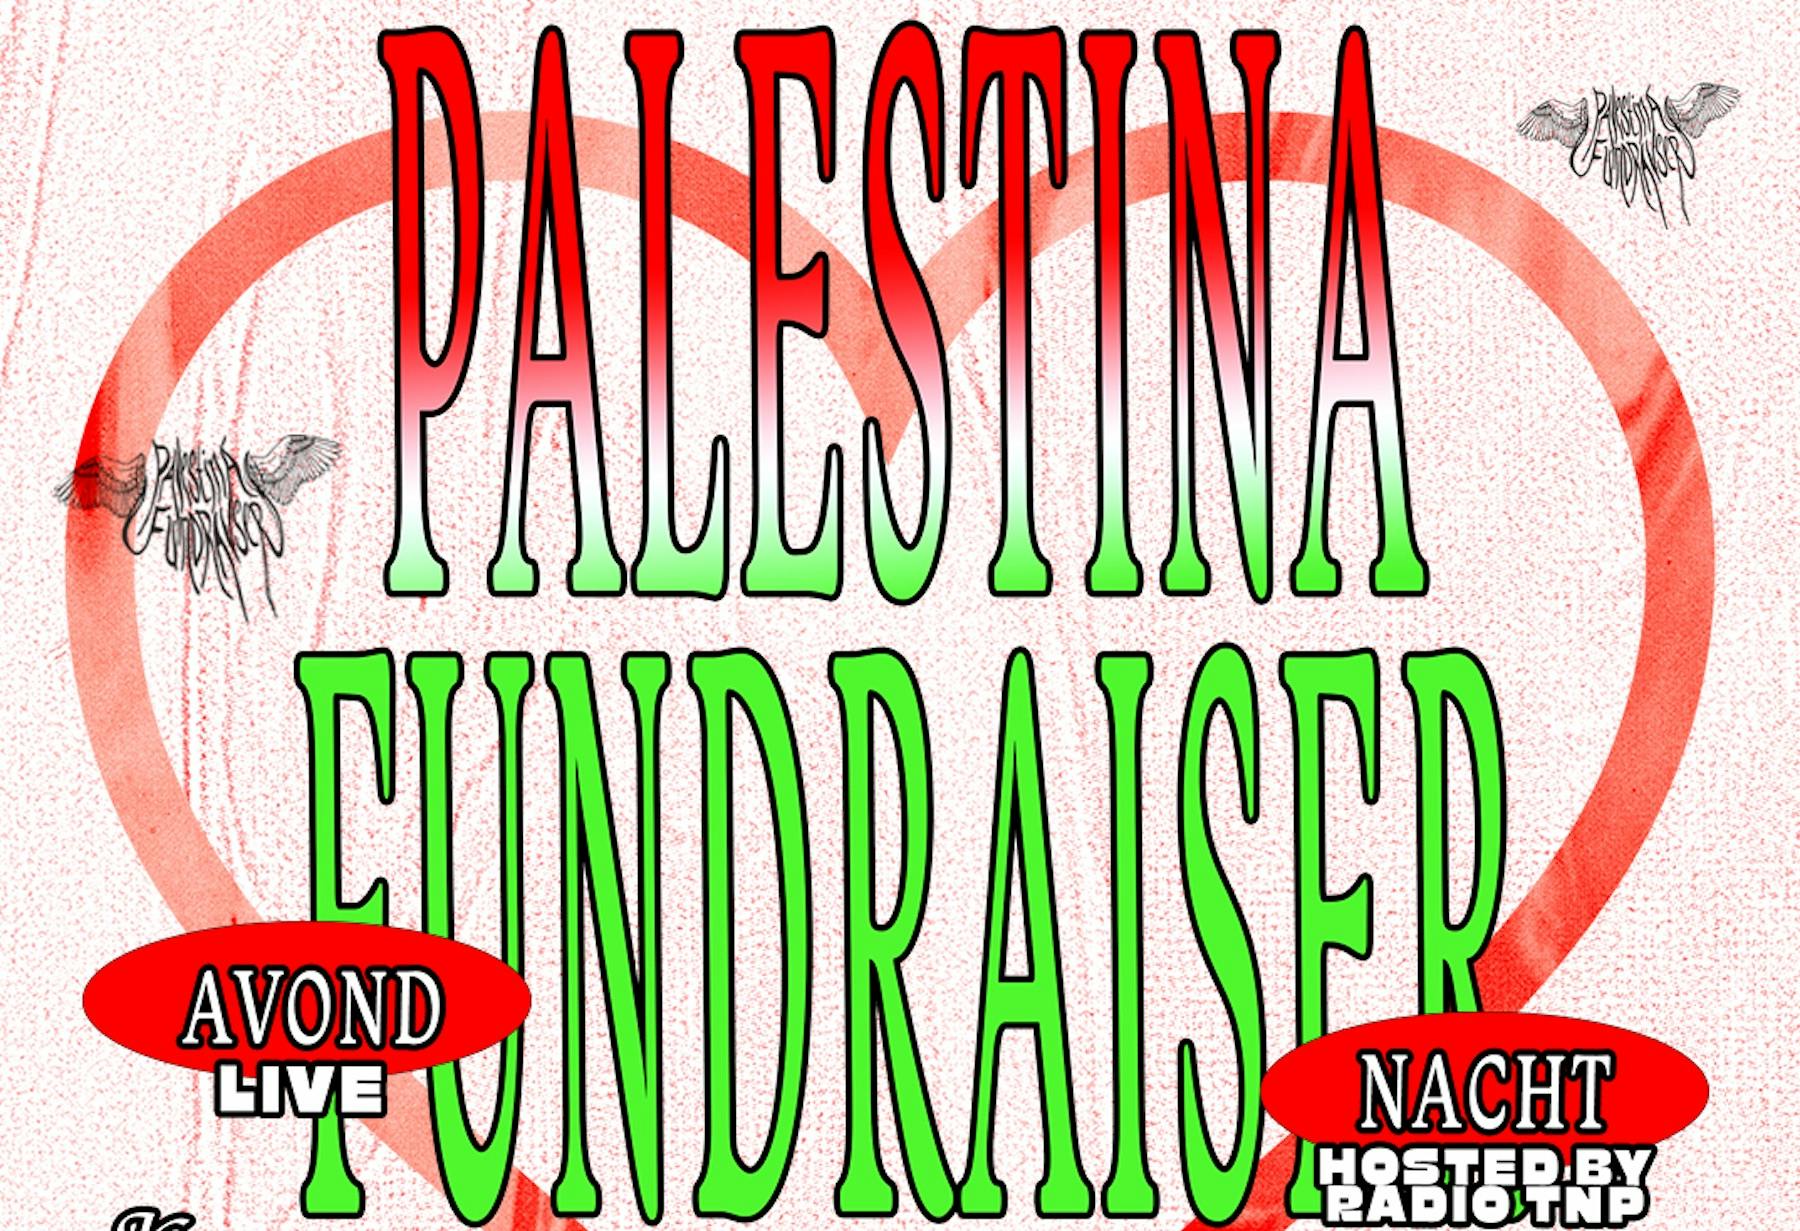 Palestina Fundraiser Festival